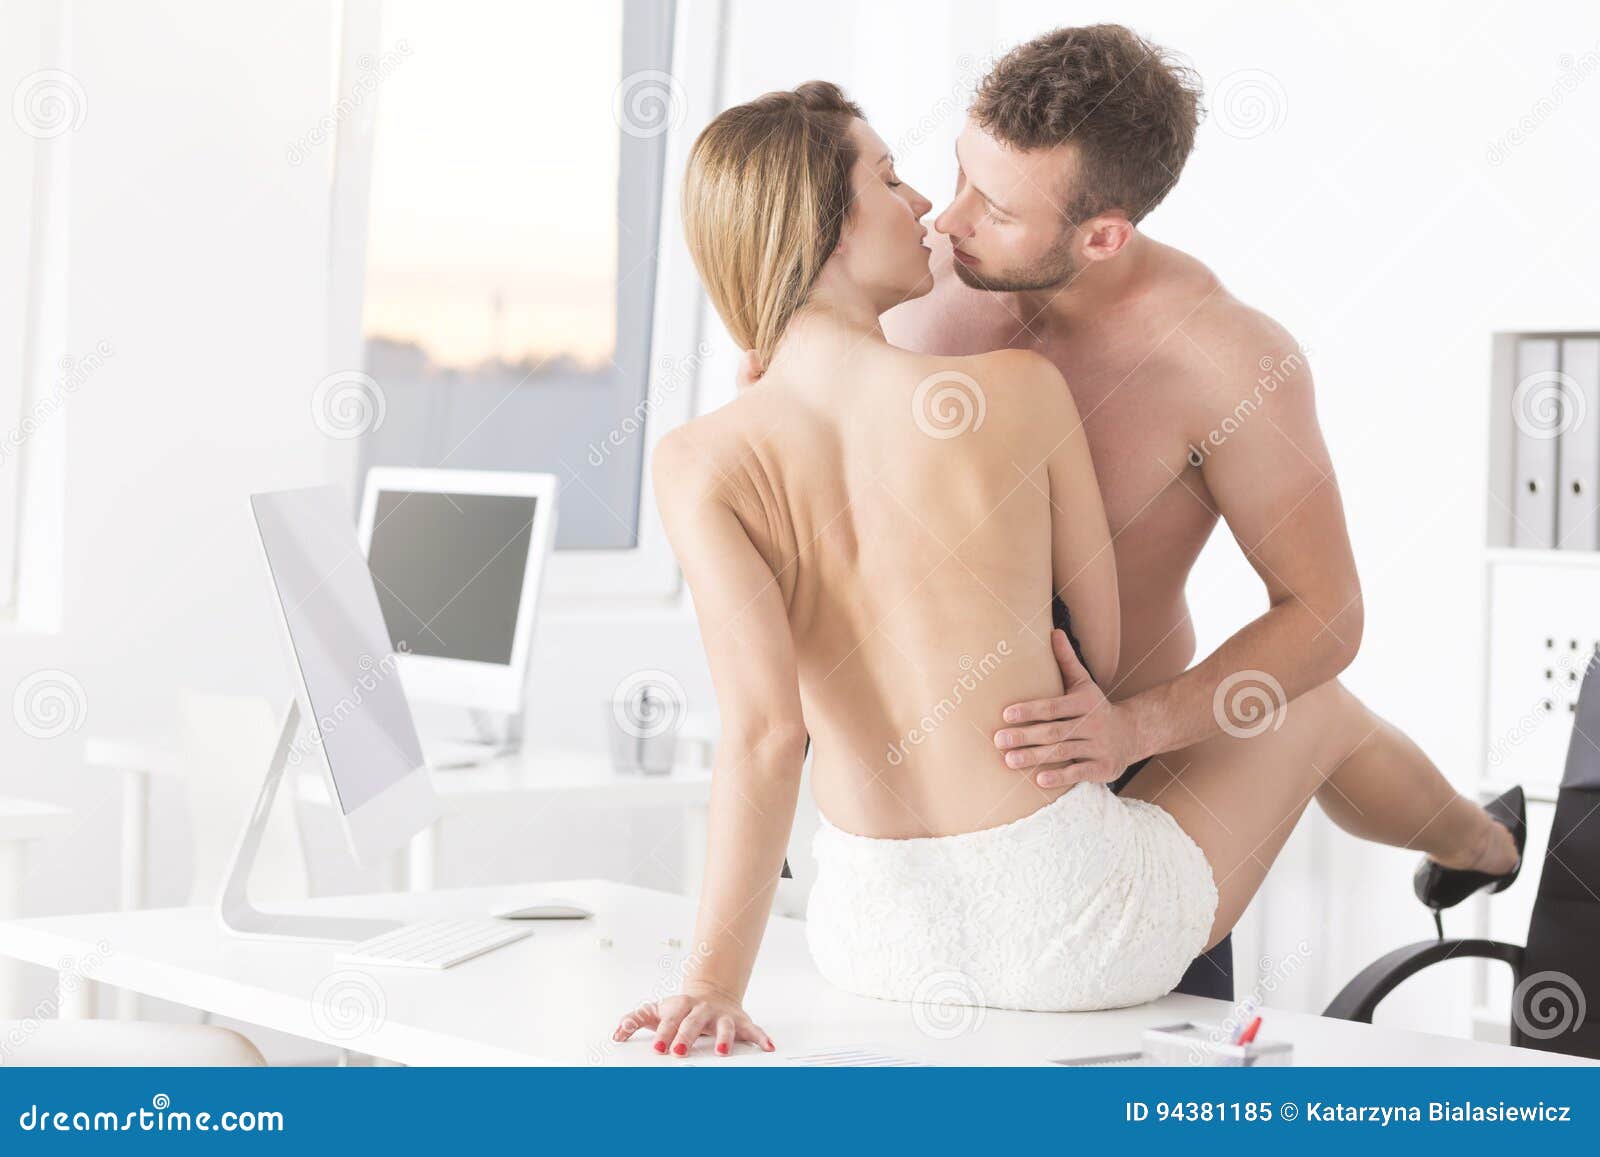 dee broten share sex on the desk photos